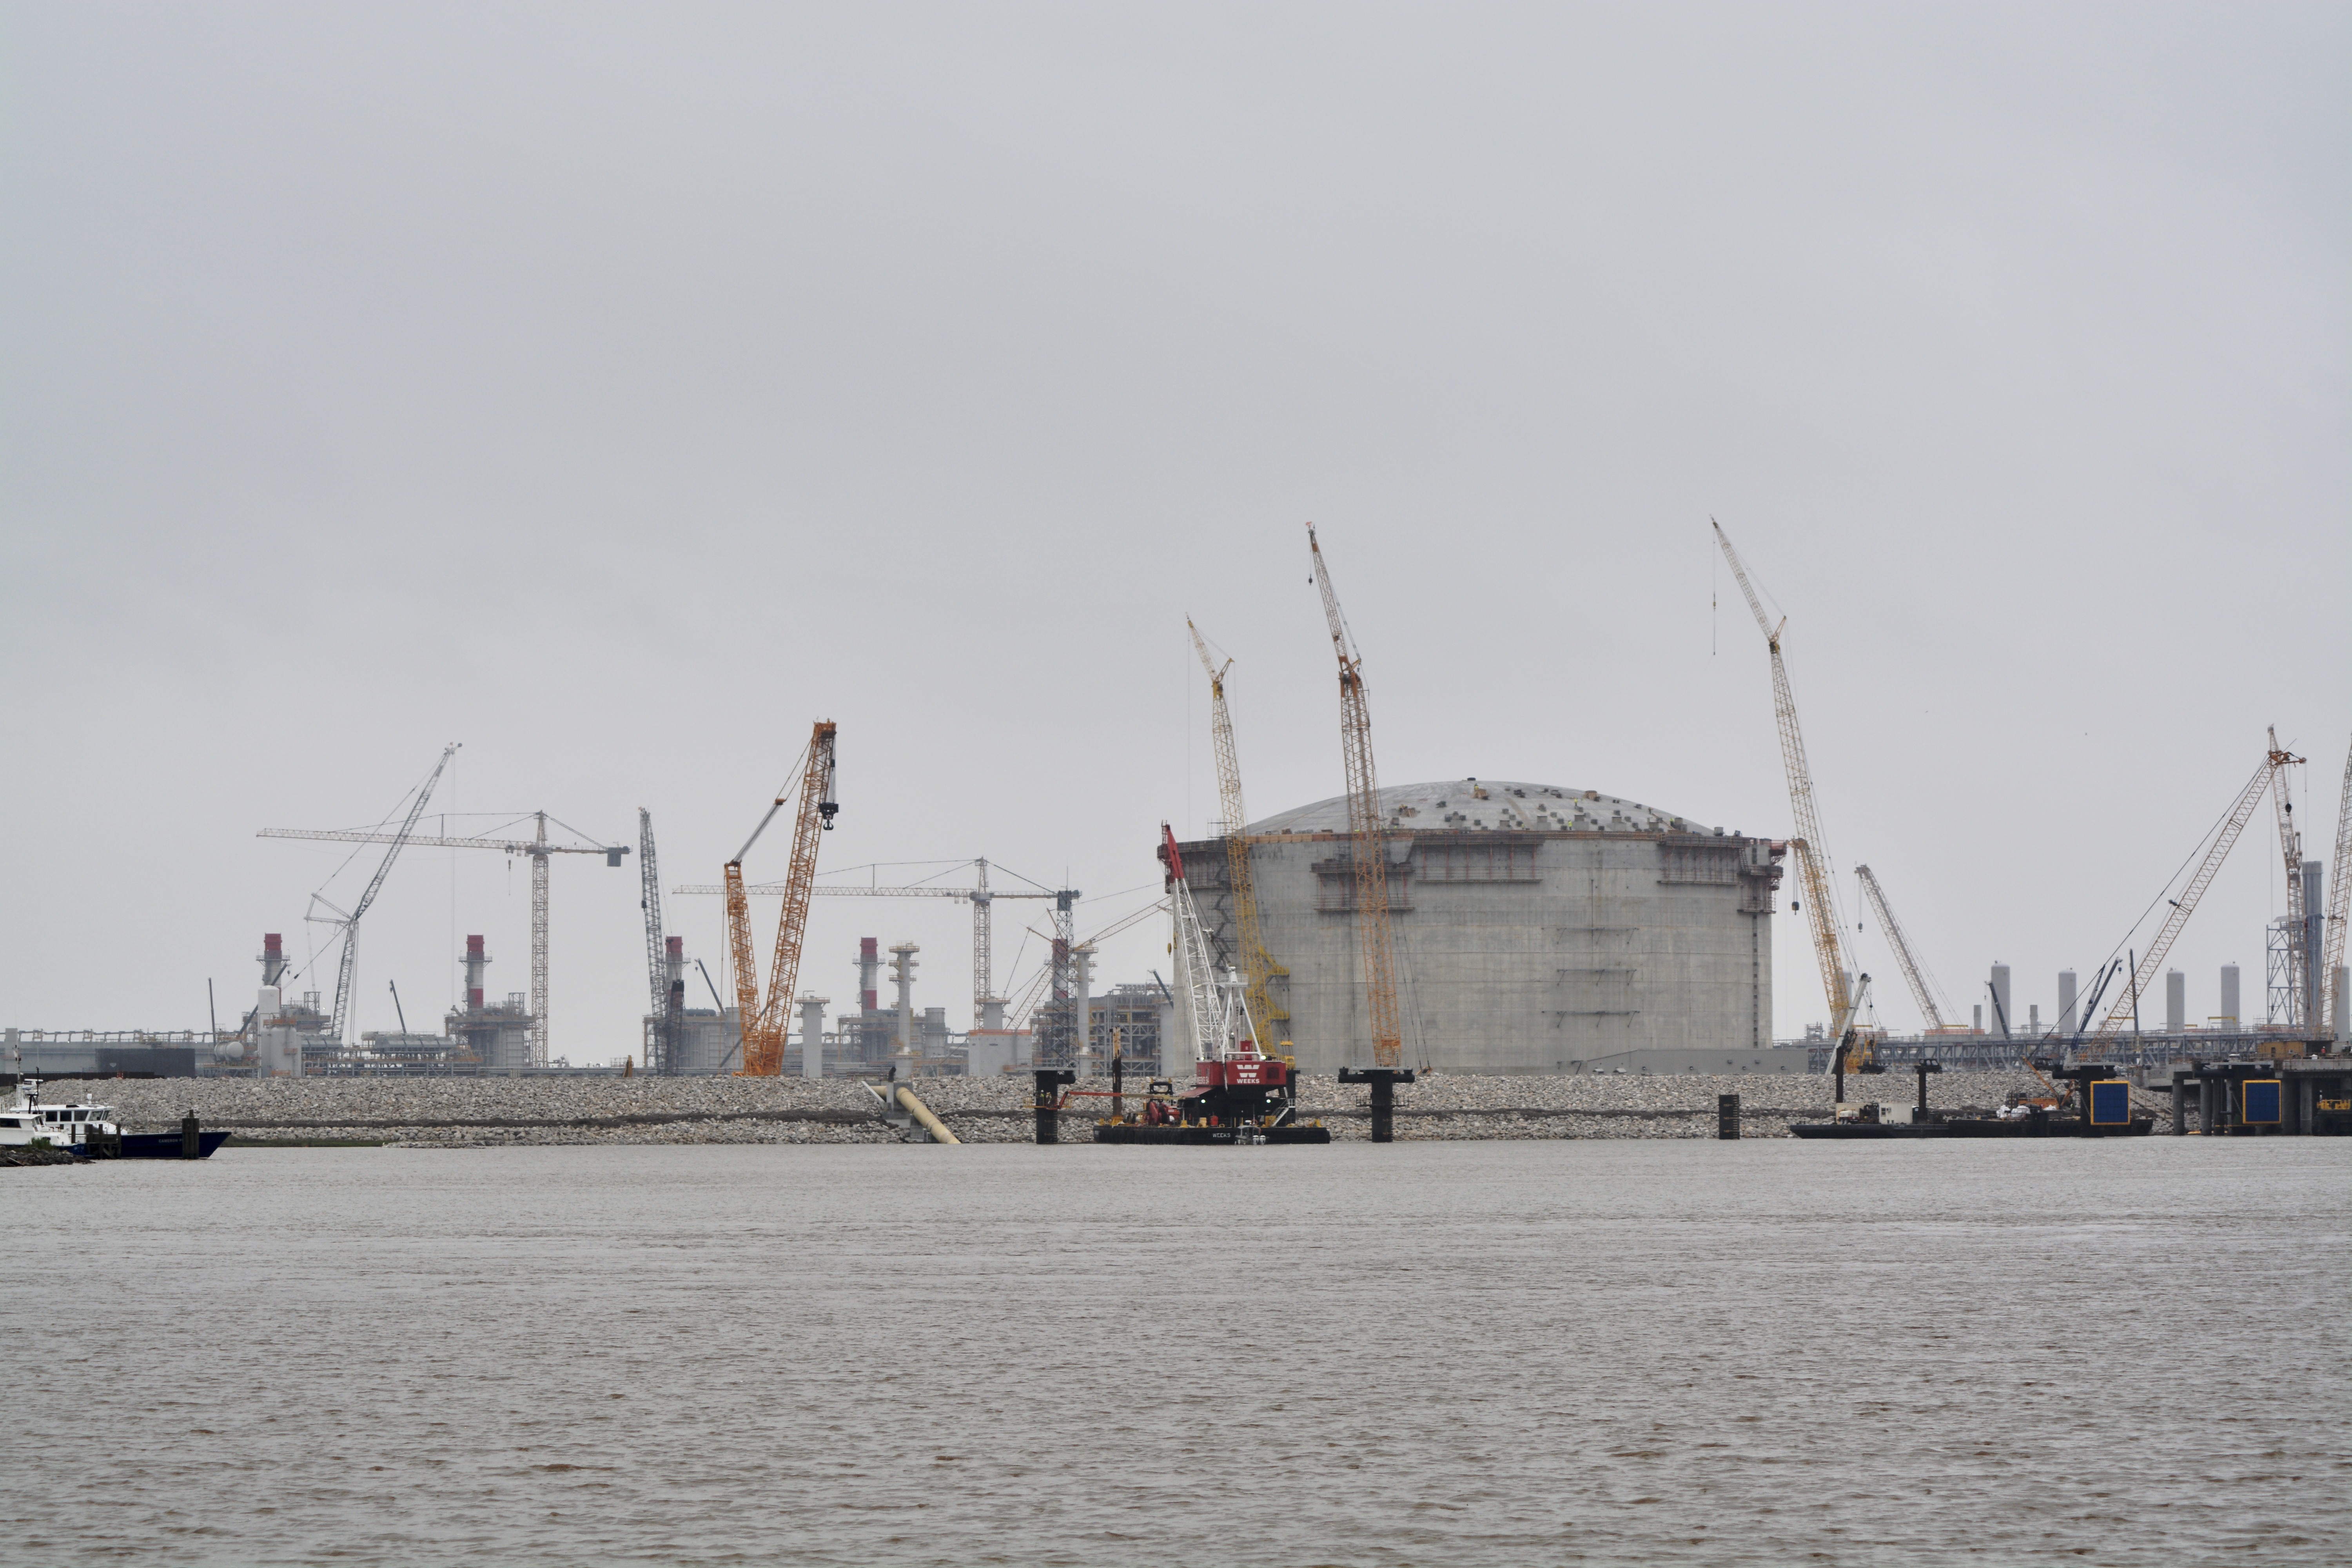 LNG export facility under construction